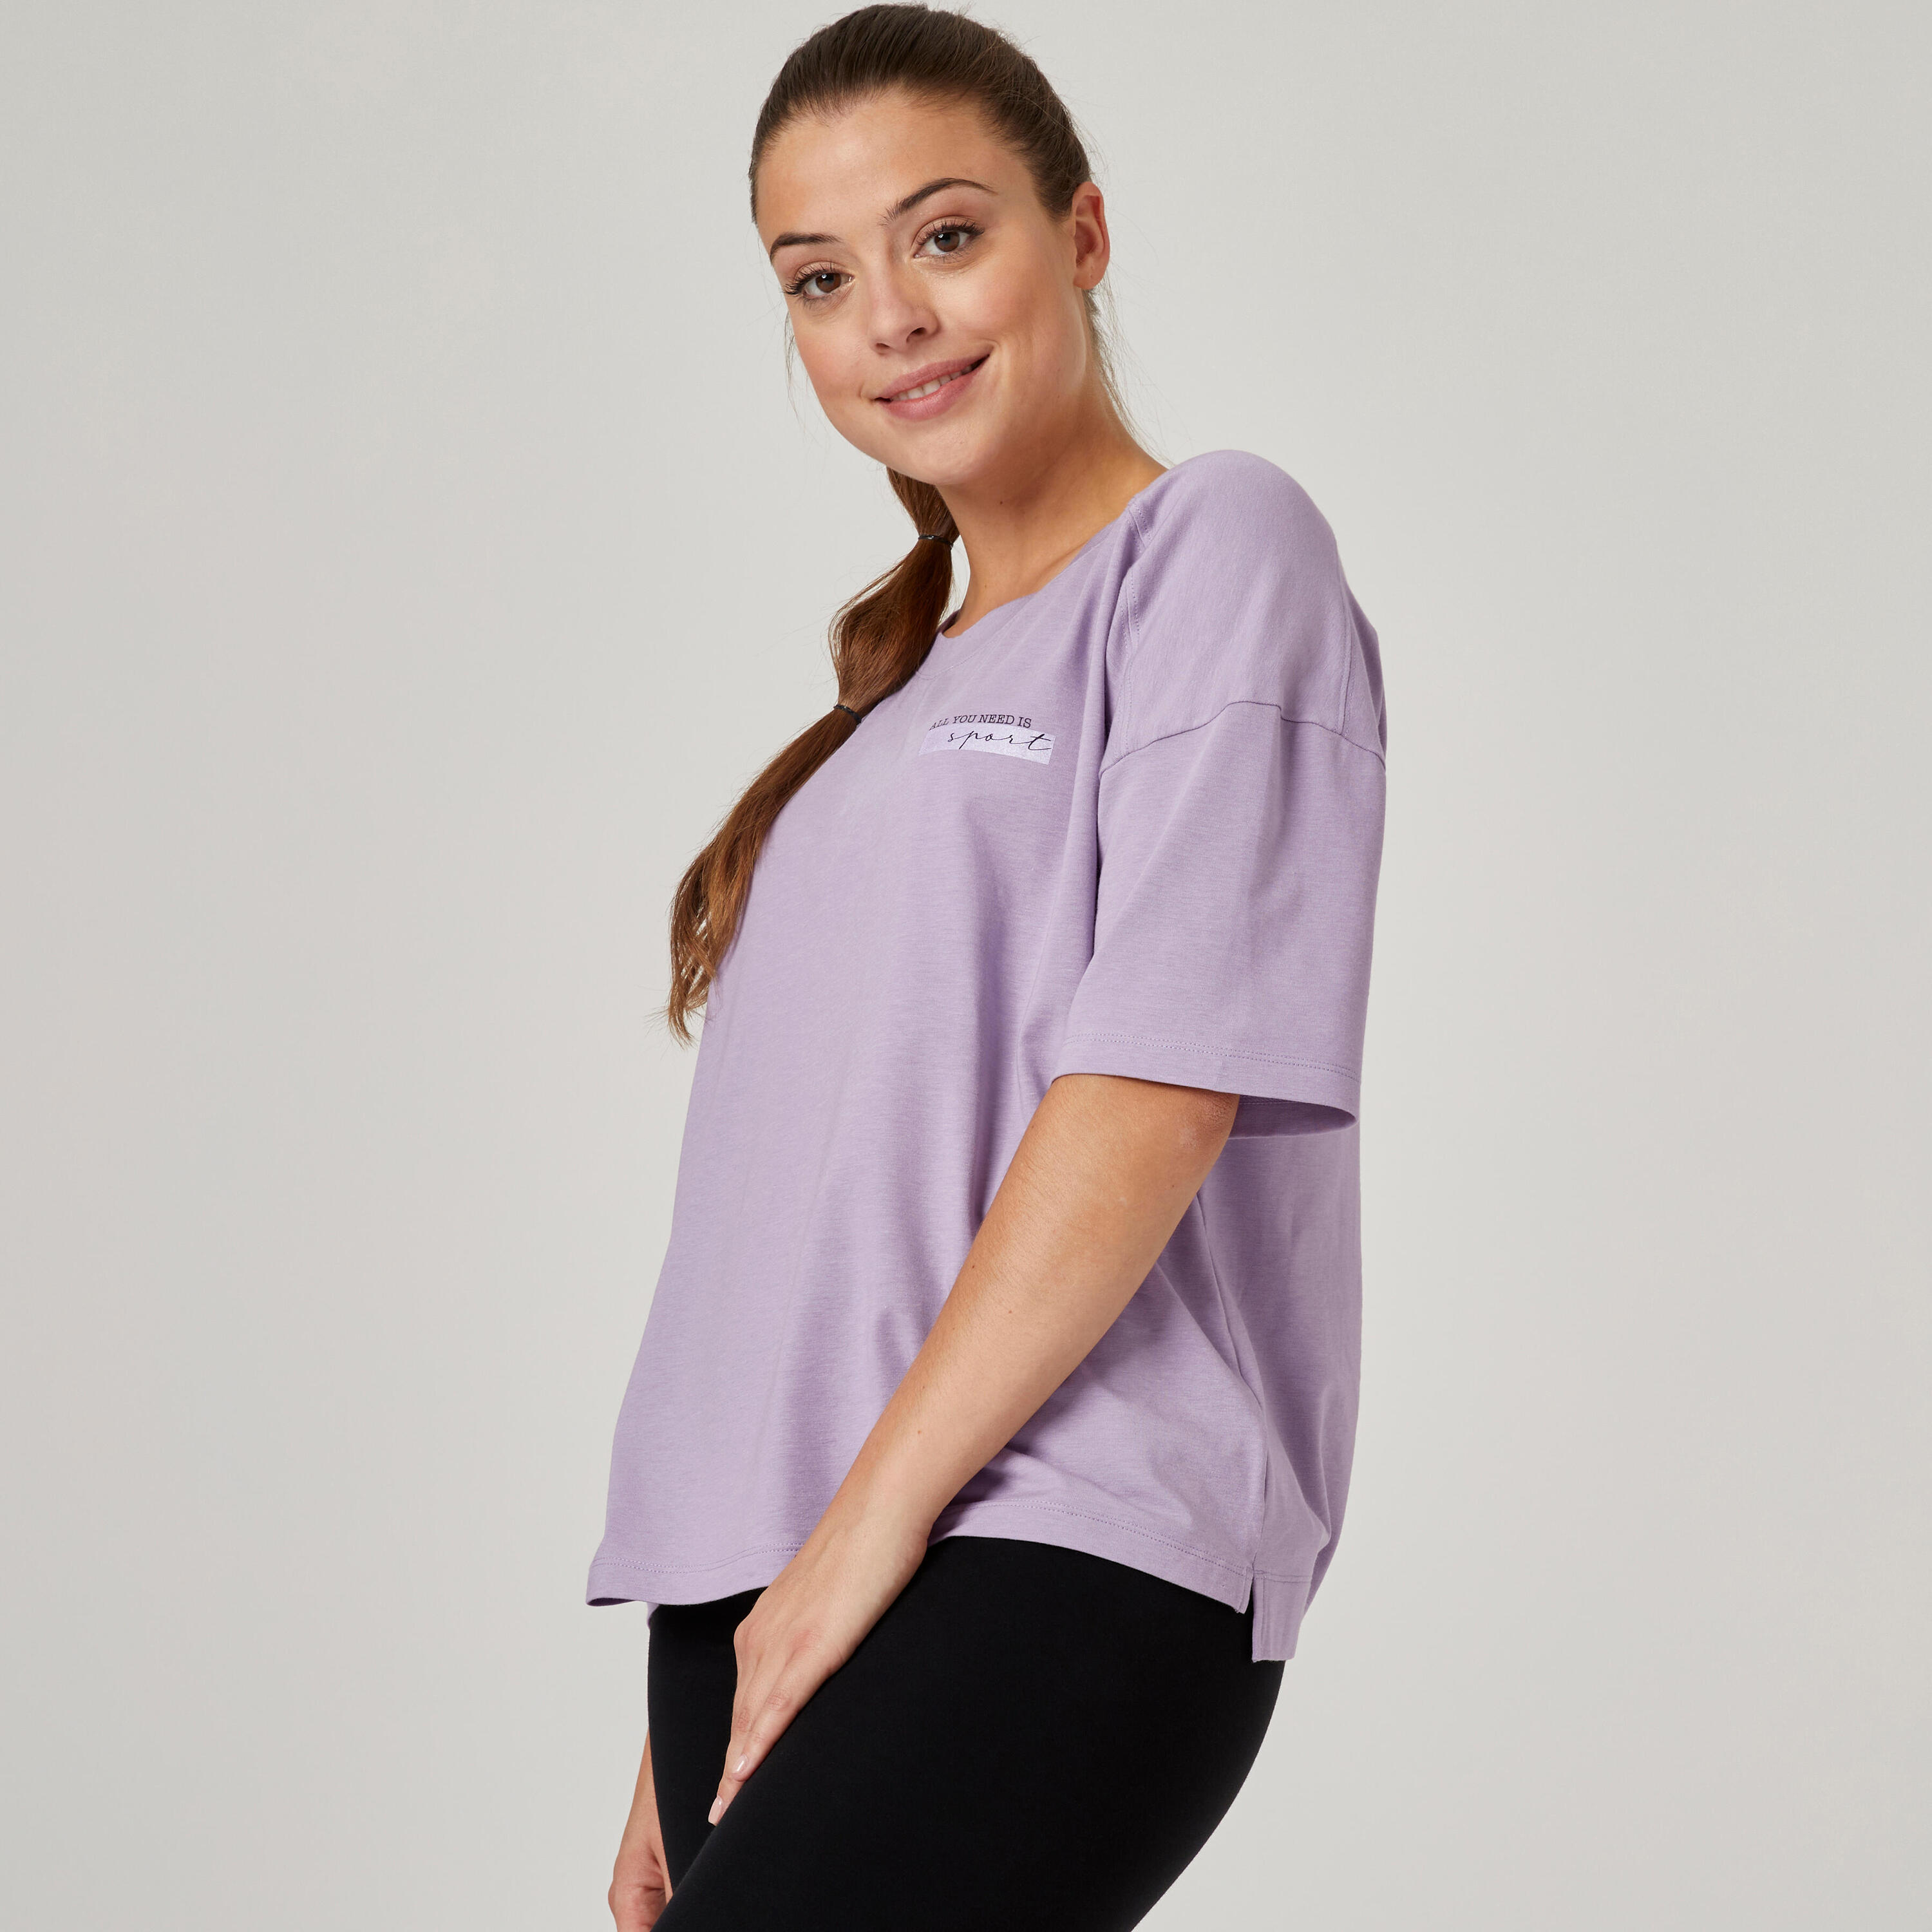 DOMYOS Women's Short-Sleeved Loose-Fit Majority Cotton Fitness T-Shirt 520 - Purple